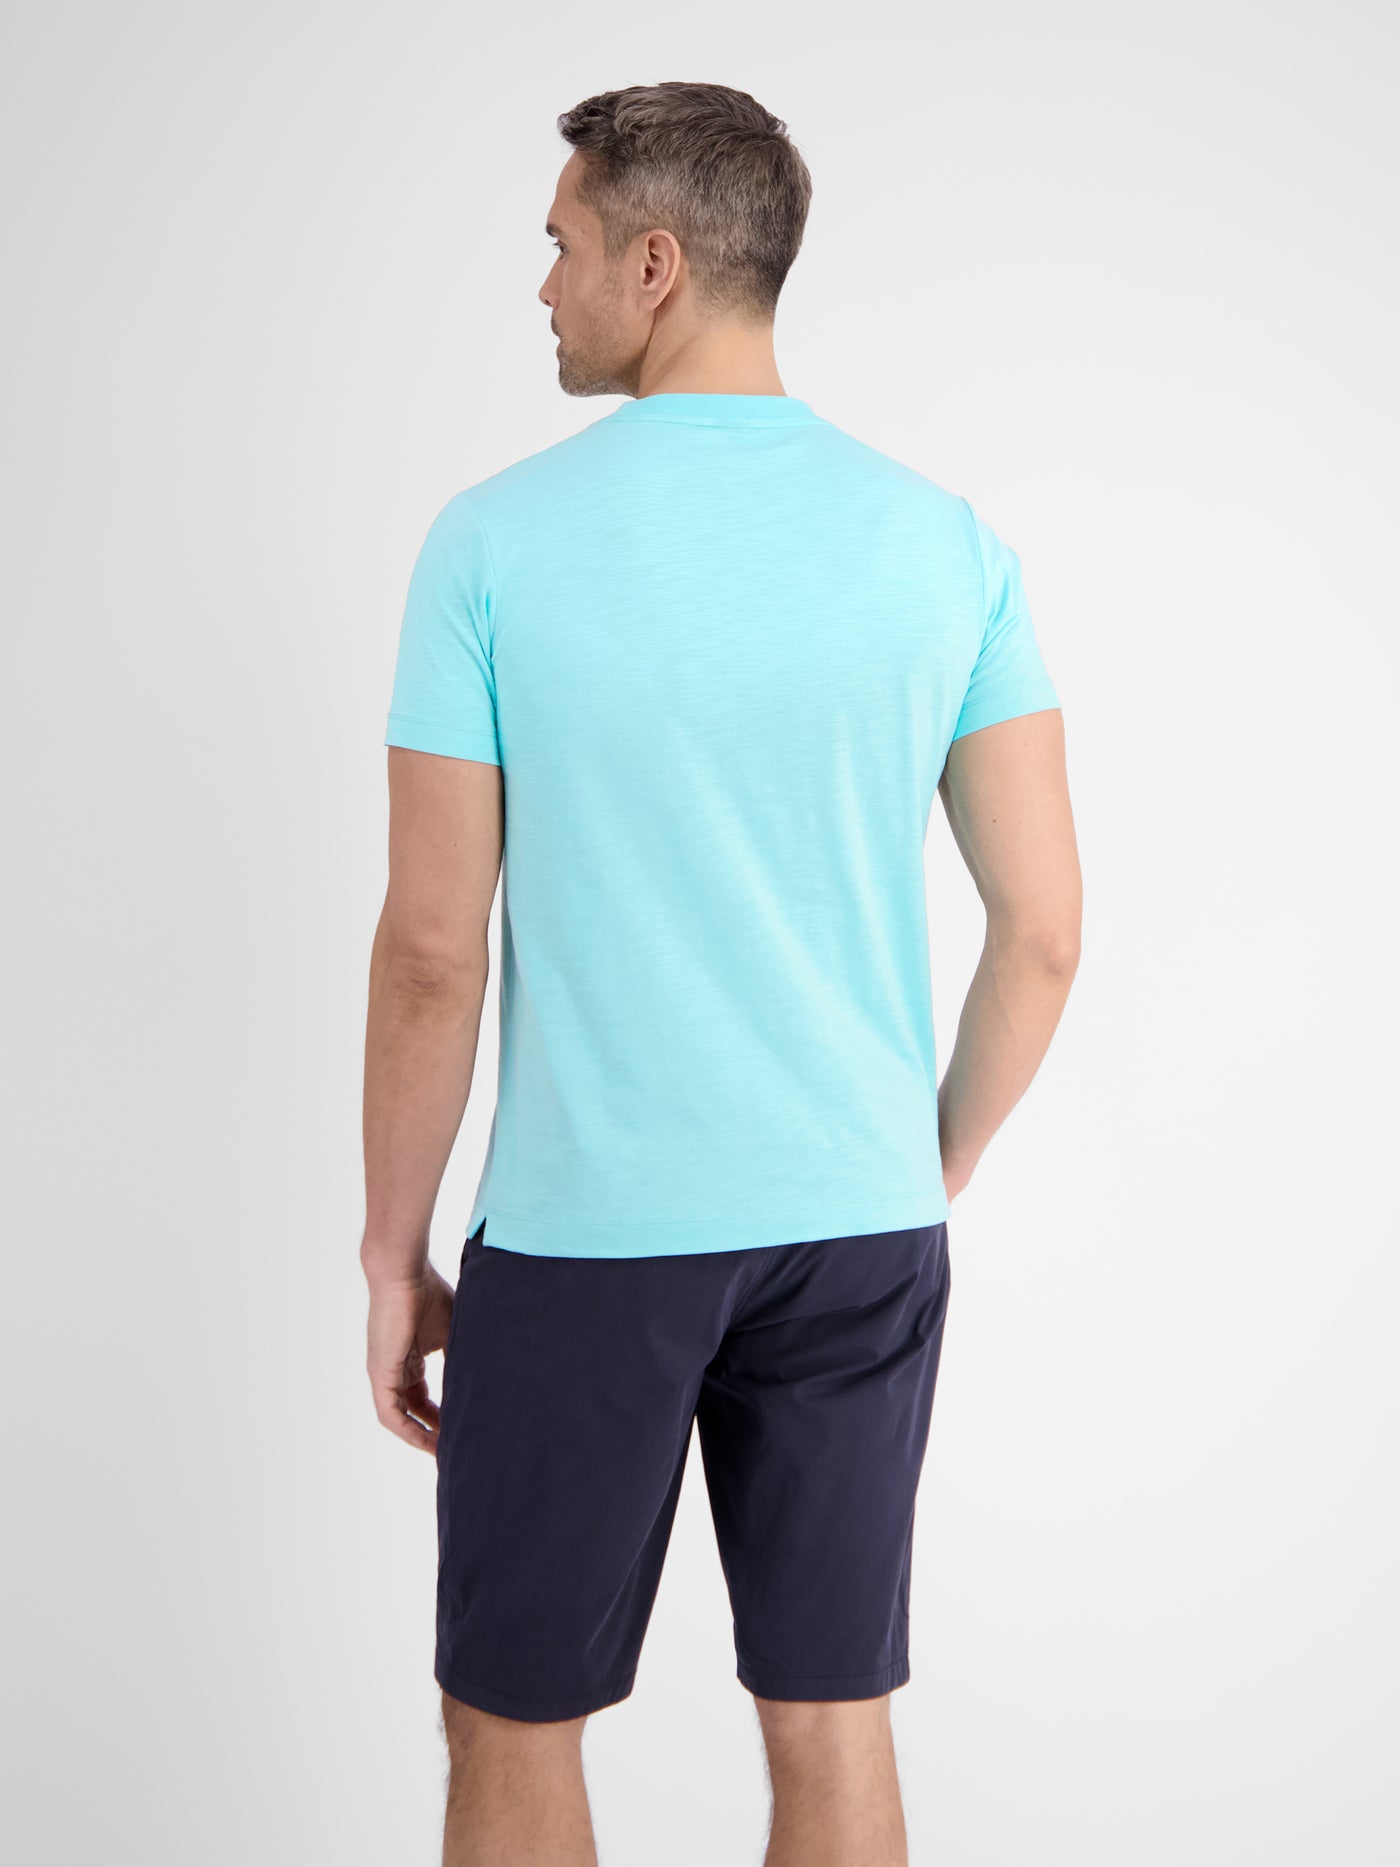 Men's T-shirt, manually designed front print